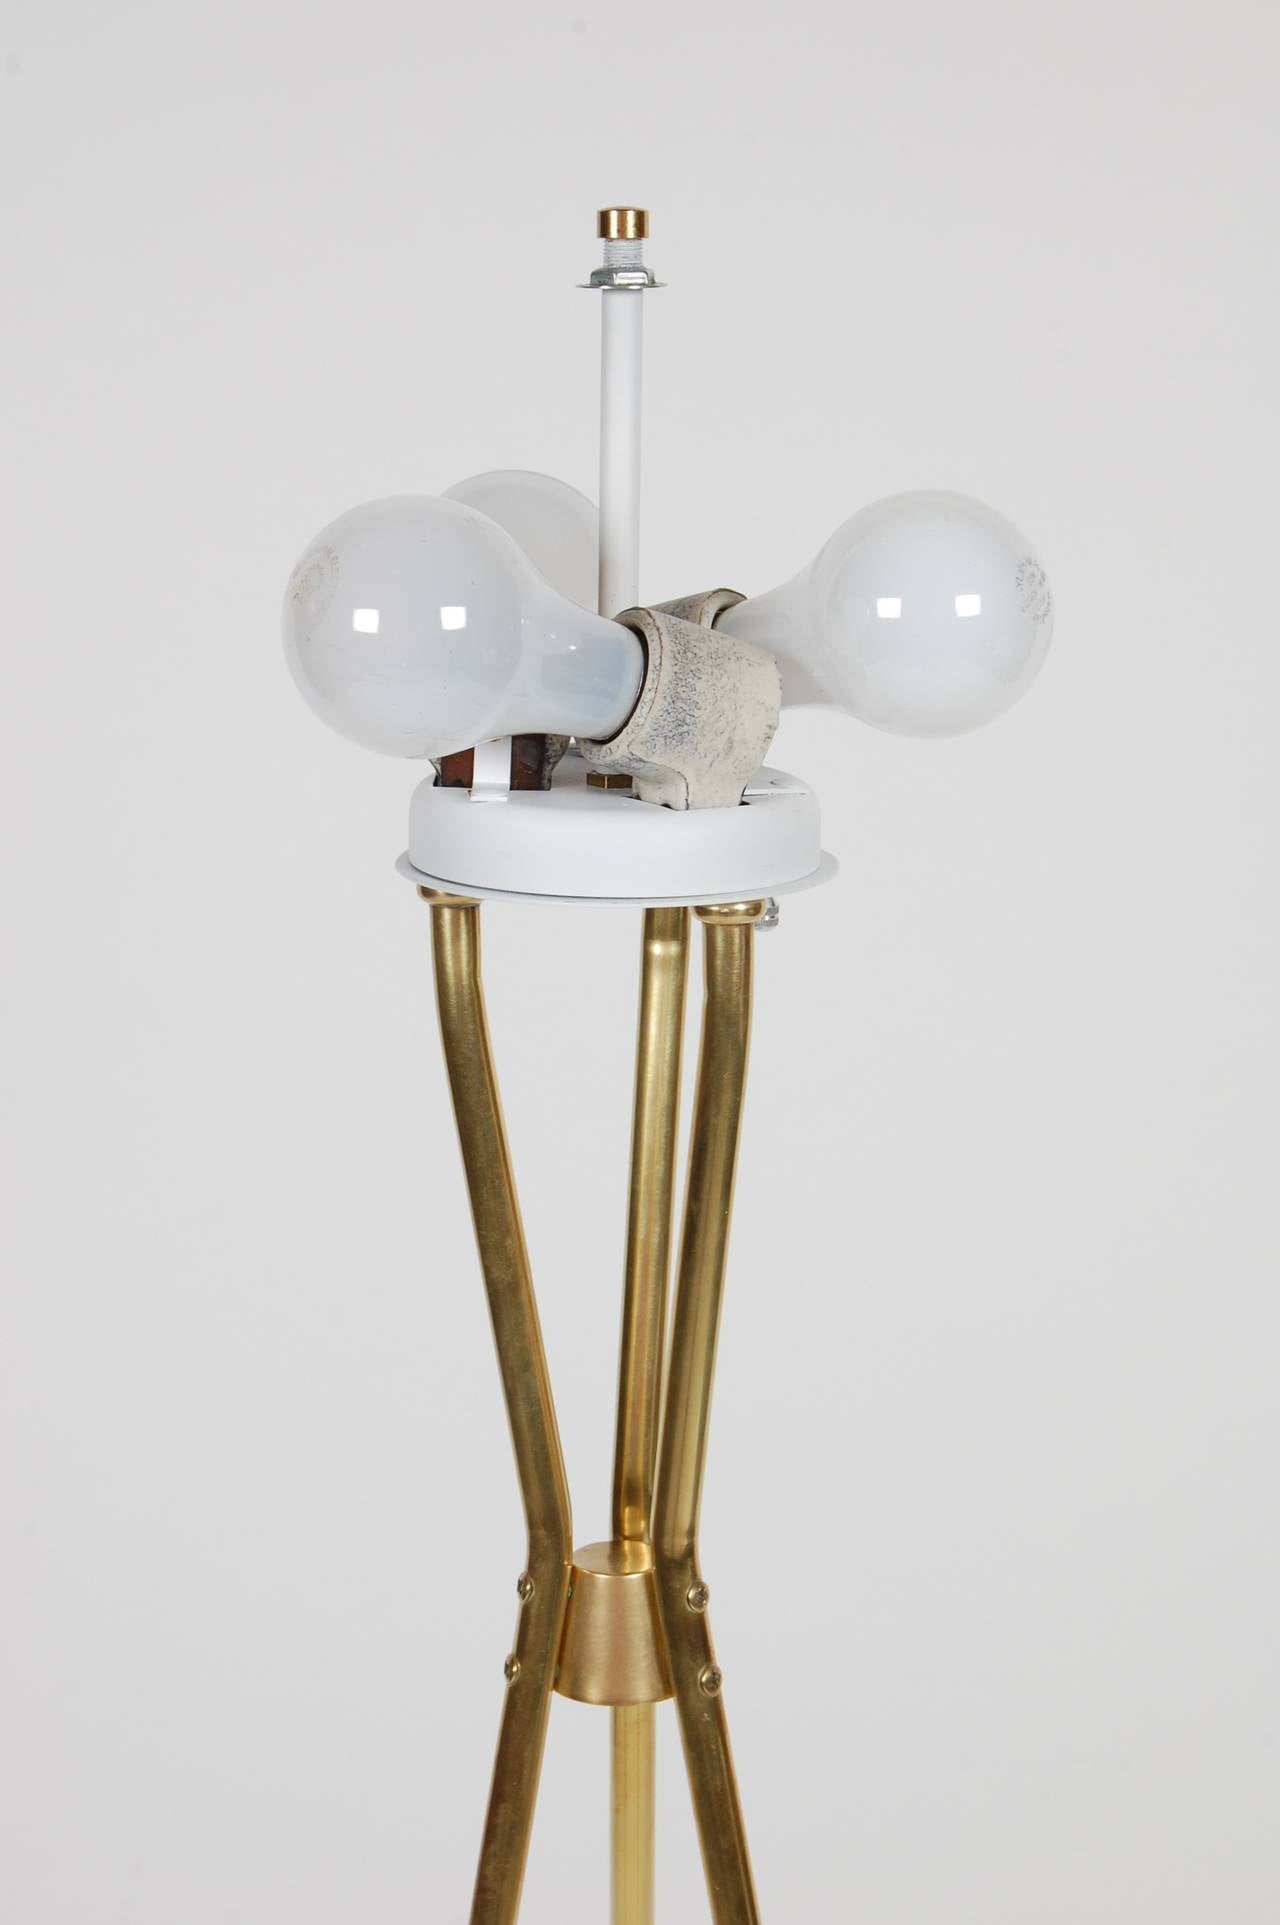 American Lightolier Tripod Floor Lamp by Gerald Thurston